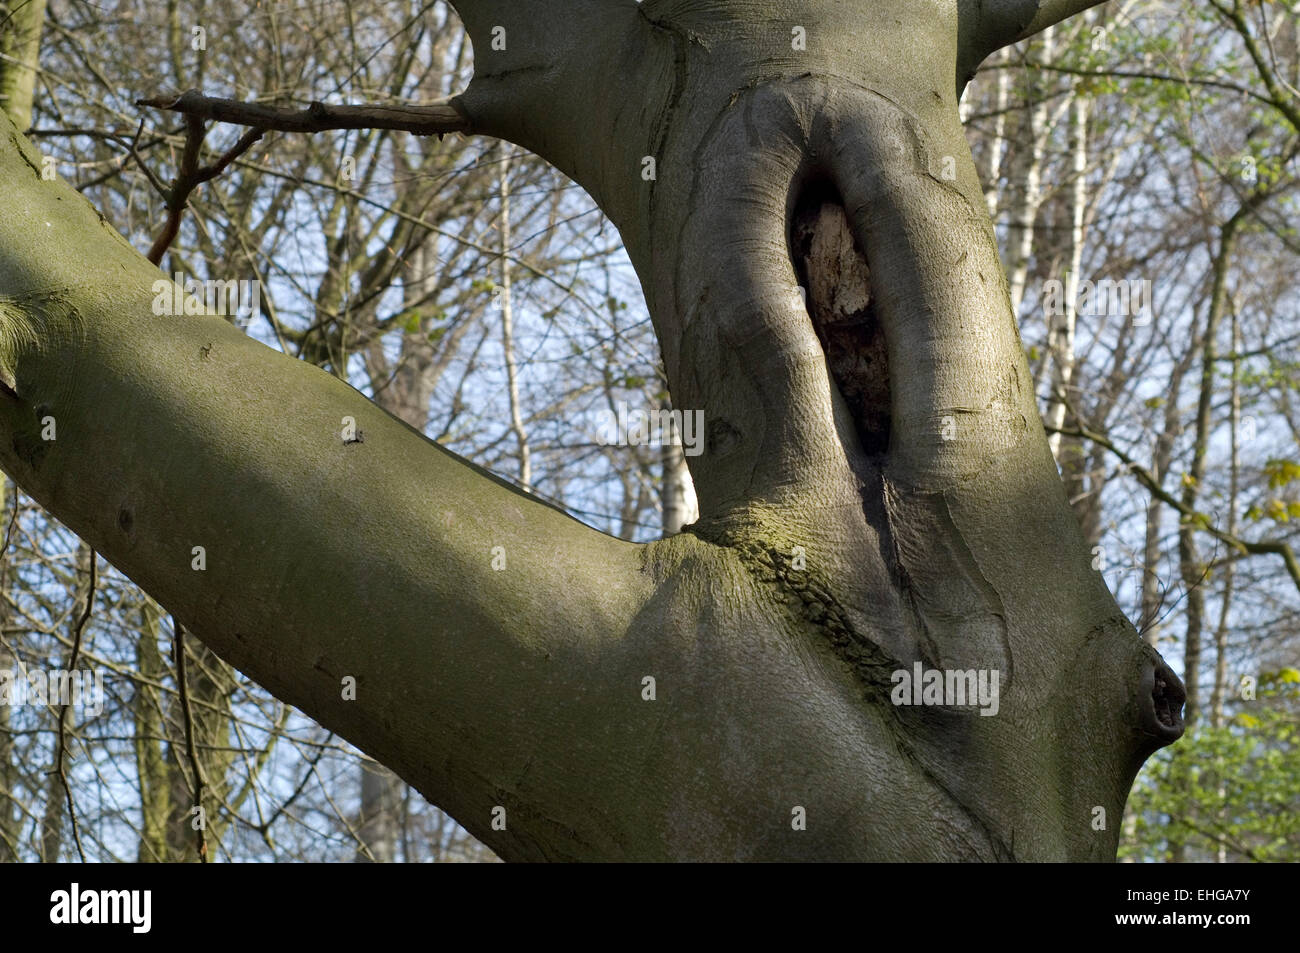 Pruning scar offering nesting cavity in European beech / Common beech tree trunk (Fagus sylvatica) Stock Photo